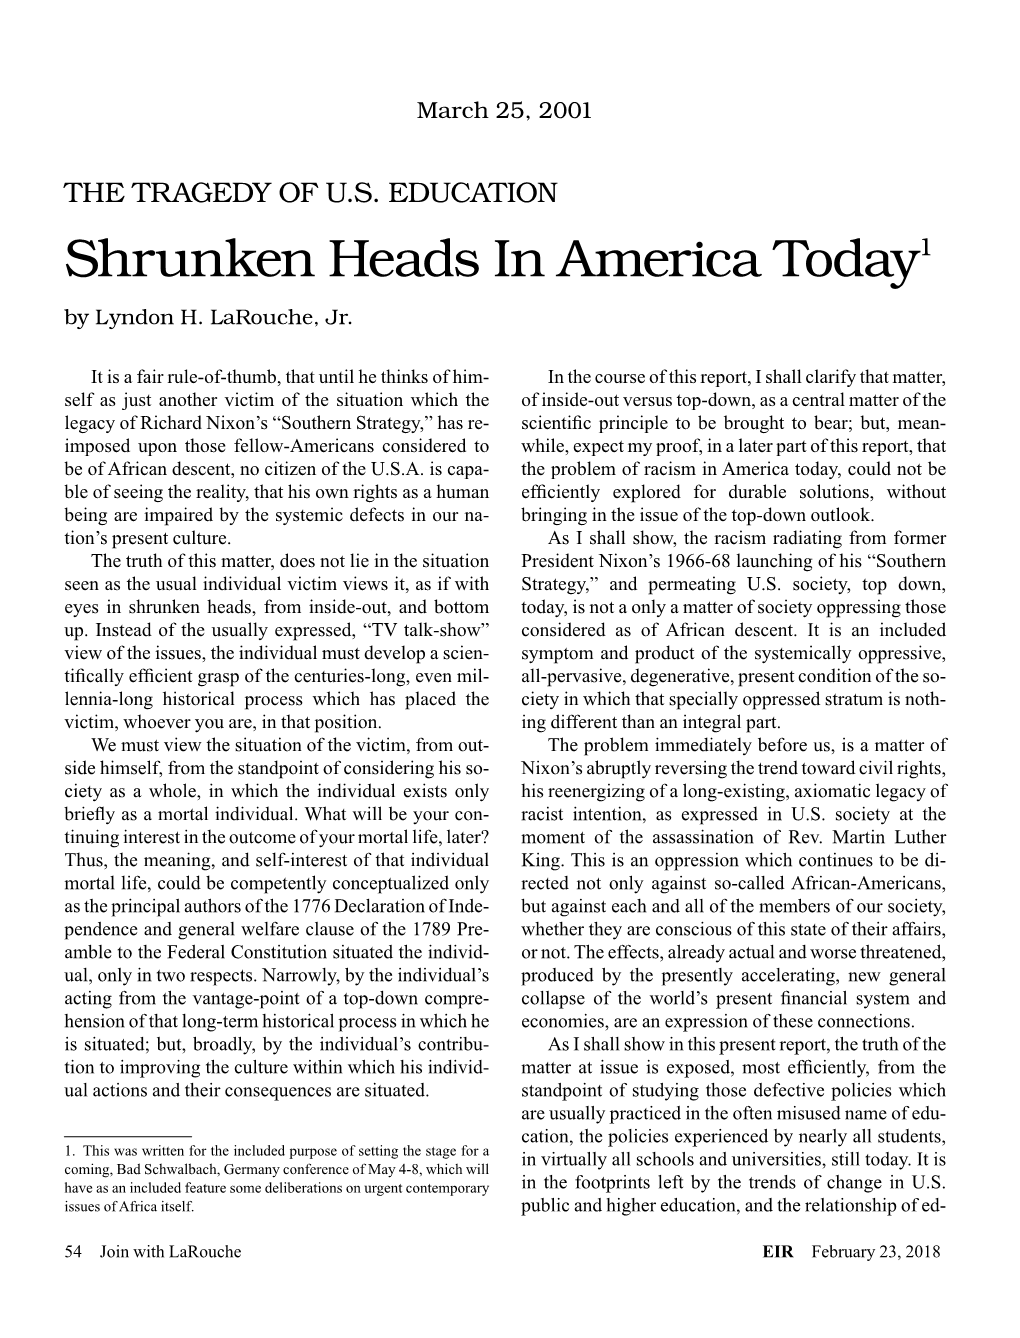 Shrunken Heads in America Today1 by Lyndon H